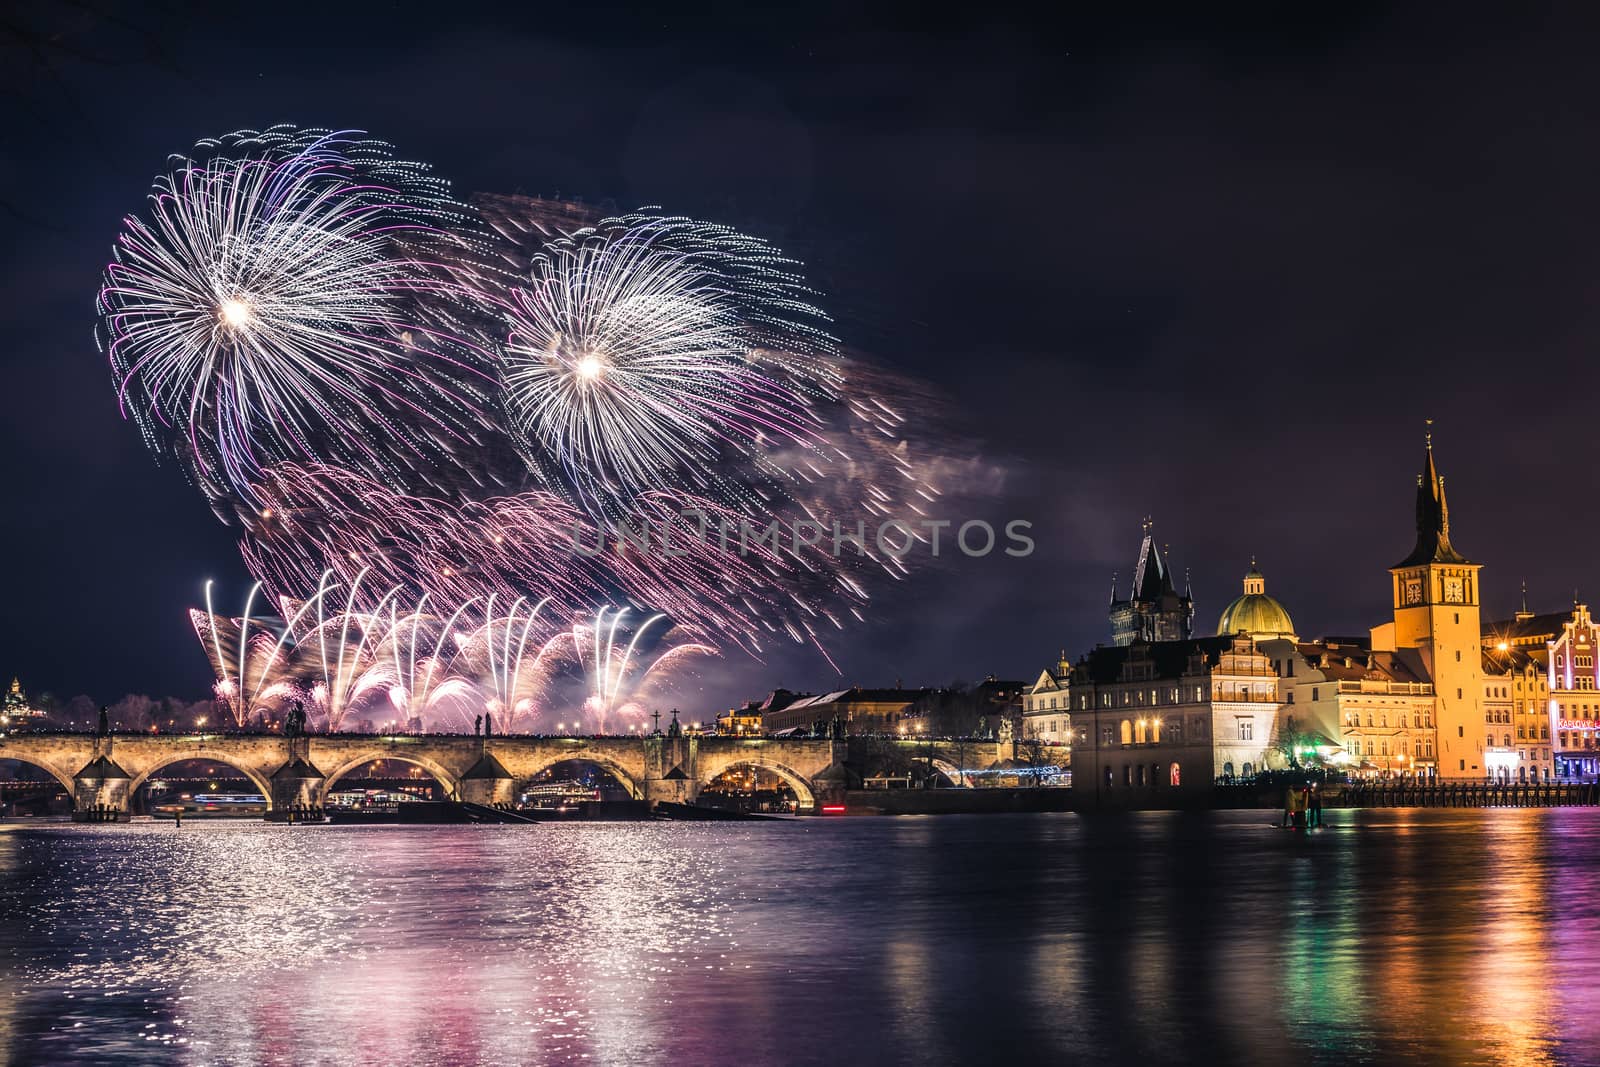 Beautiful fireworks above Charles bridge at night in Prague, Czech Republic. by petrsvoboda91